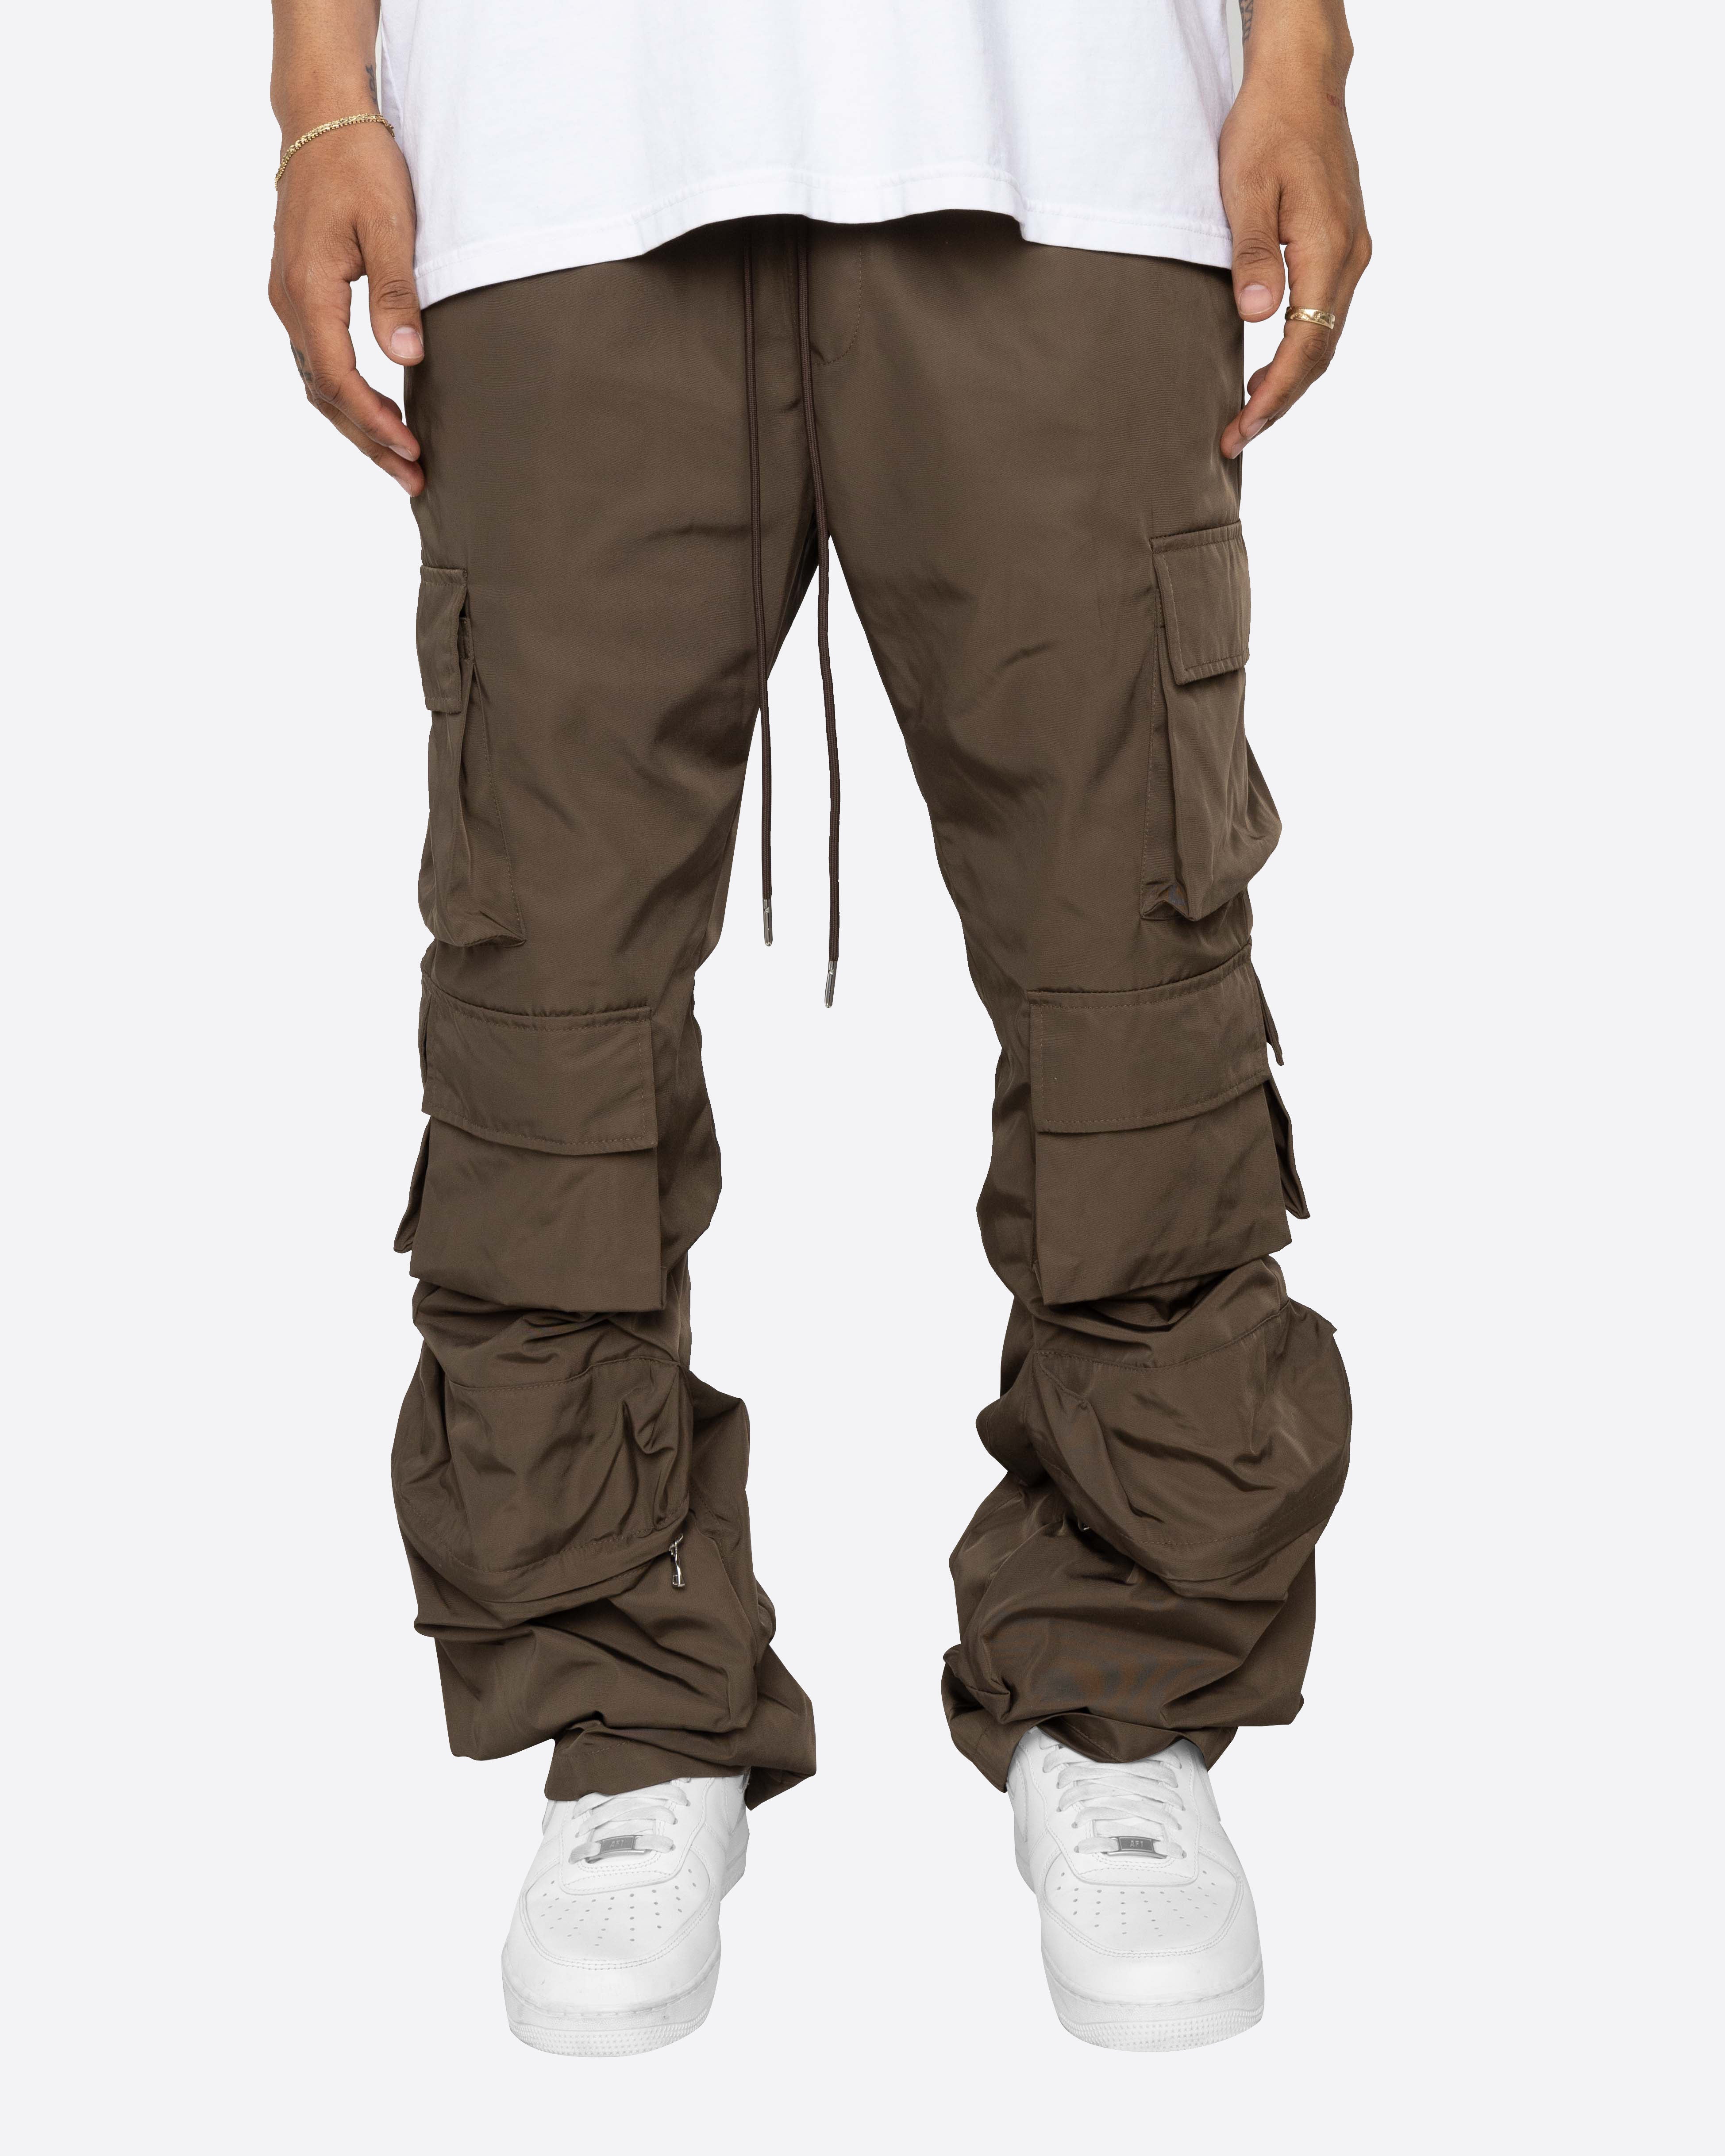 RSP PANTS Series Military Special Agent Tactical Pants Eight Pocket  Anti-Scratch Wear-Resistant Men's Pants Full YKK Zipper